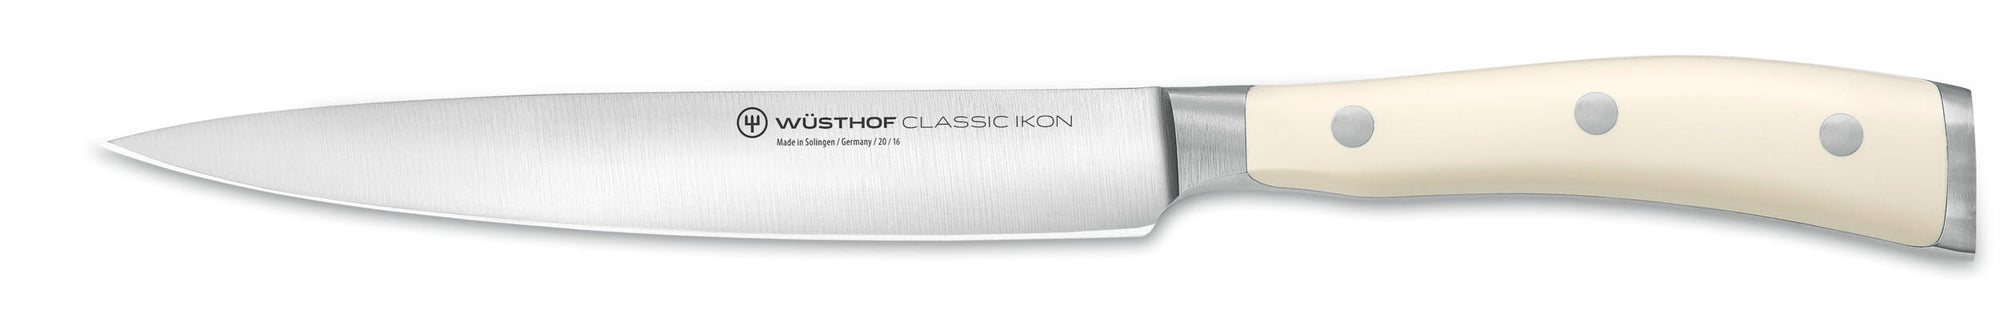 Wusthof Classic IKON 6-inch (16cm) Utility (Sandwich) Knife, Creme - 4506-6/16